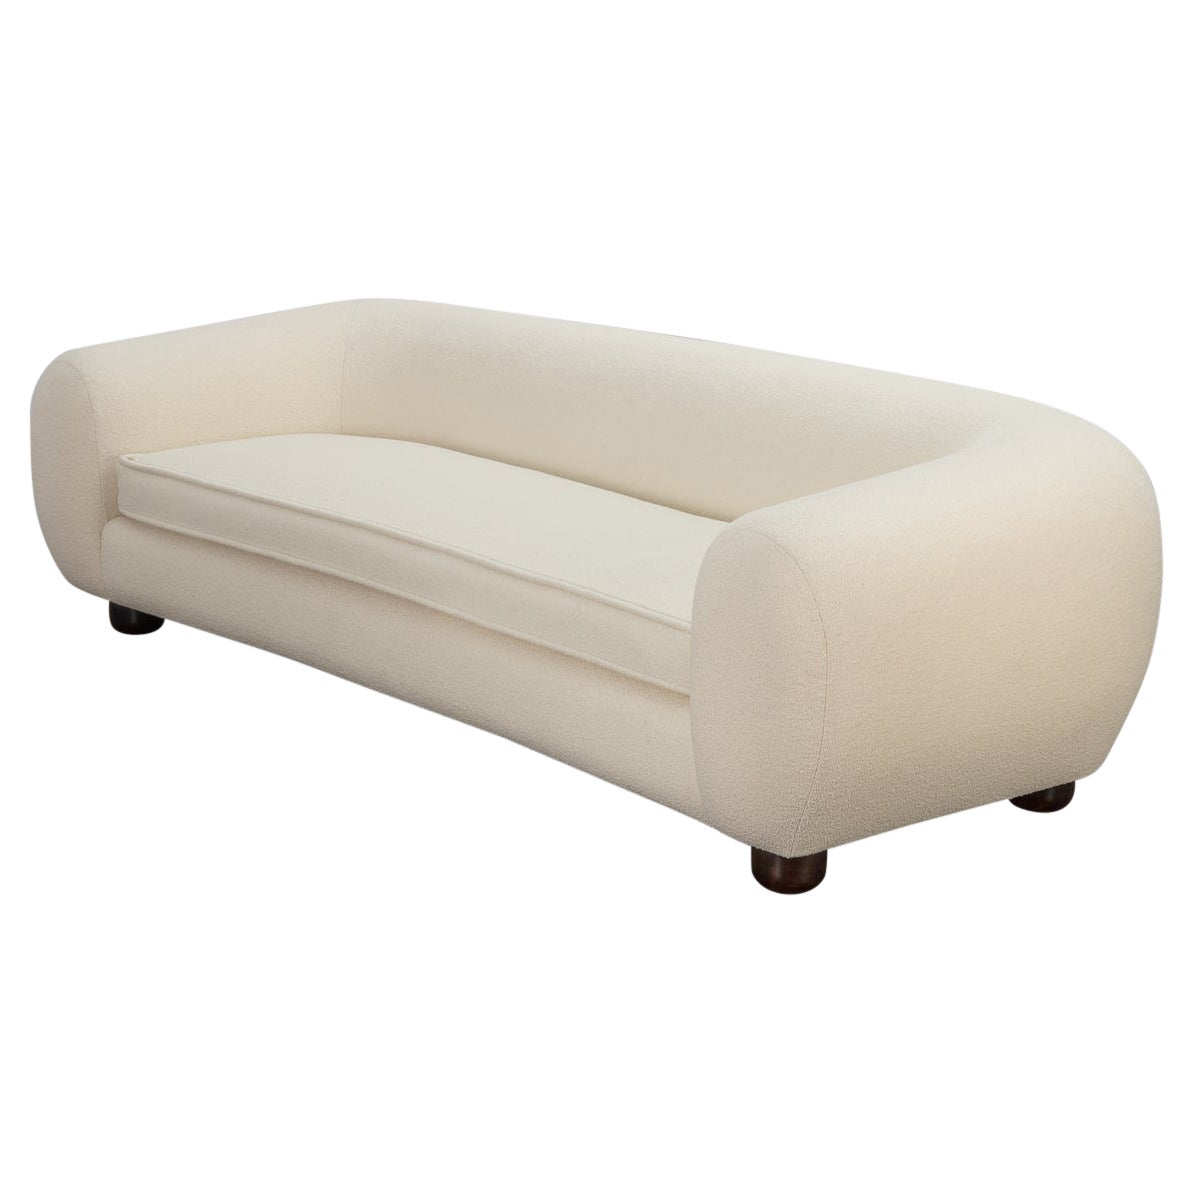  Custom Curved Sofa - Knoll Pearl Boucle with Ball Feet